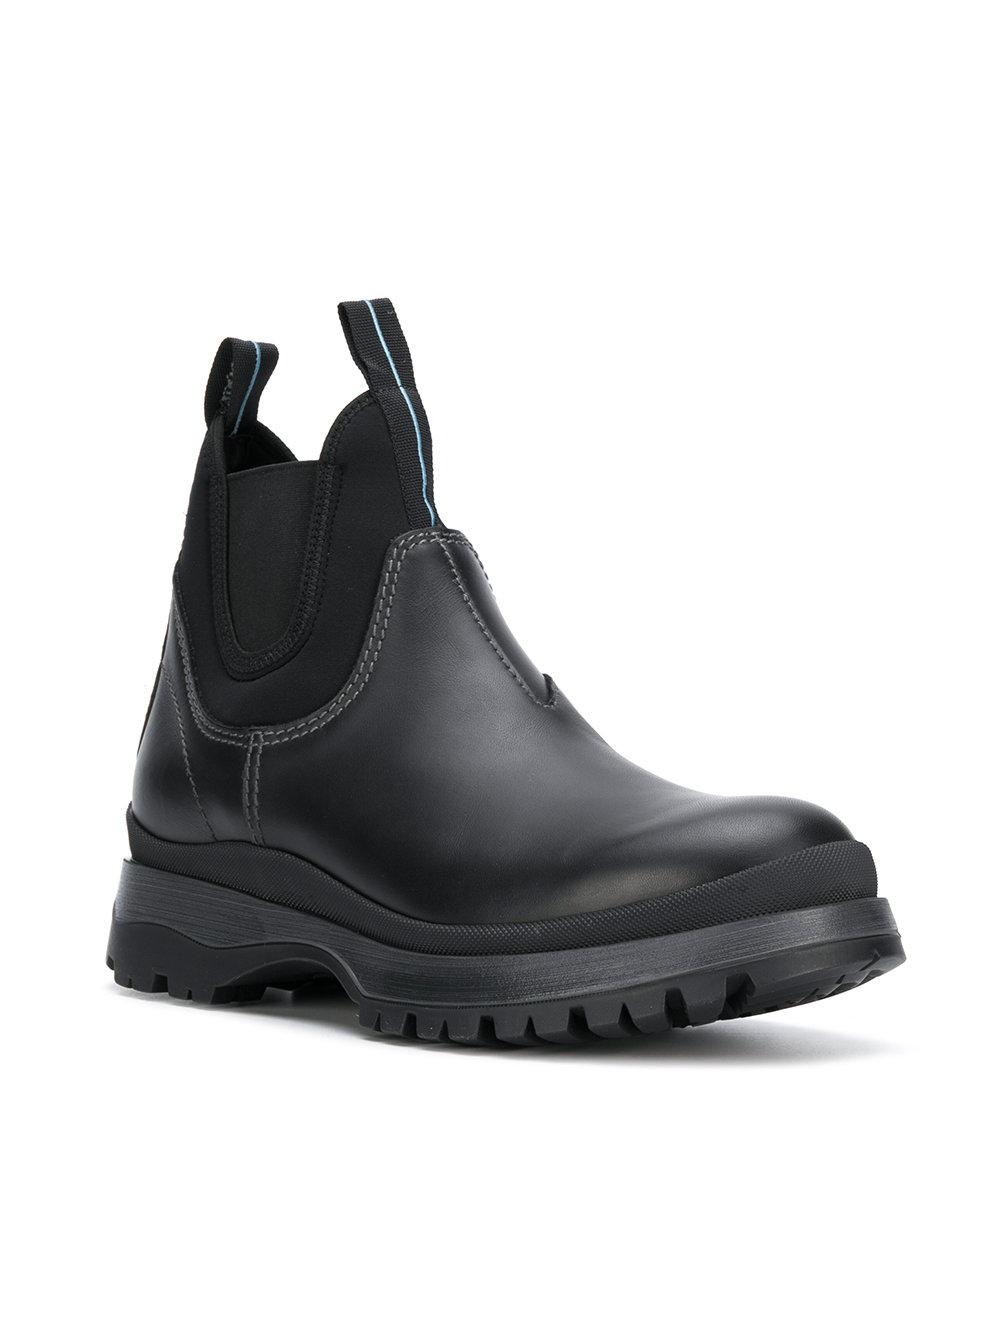 Prada Brixen Rain Boots in Black for Men - Lyst